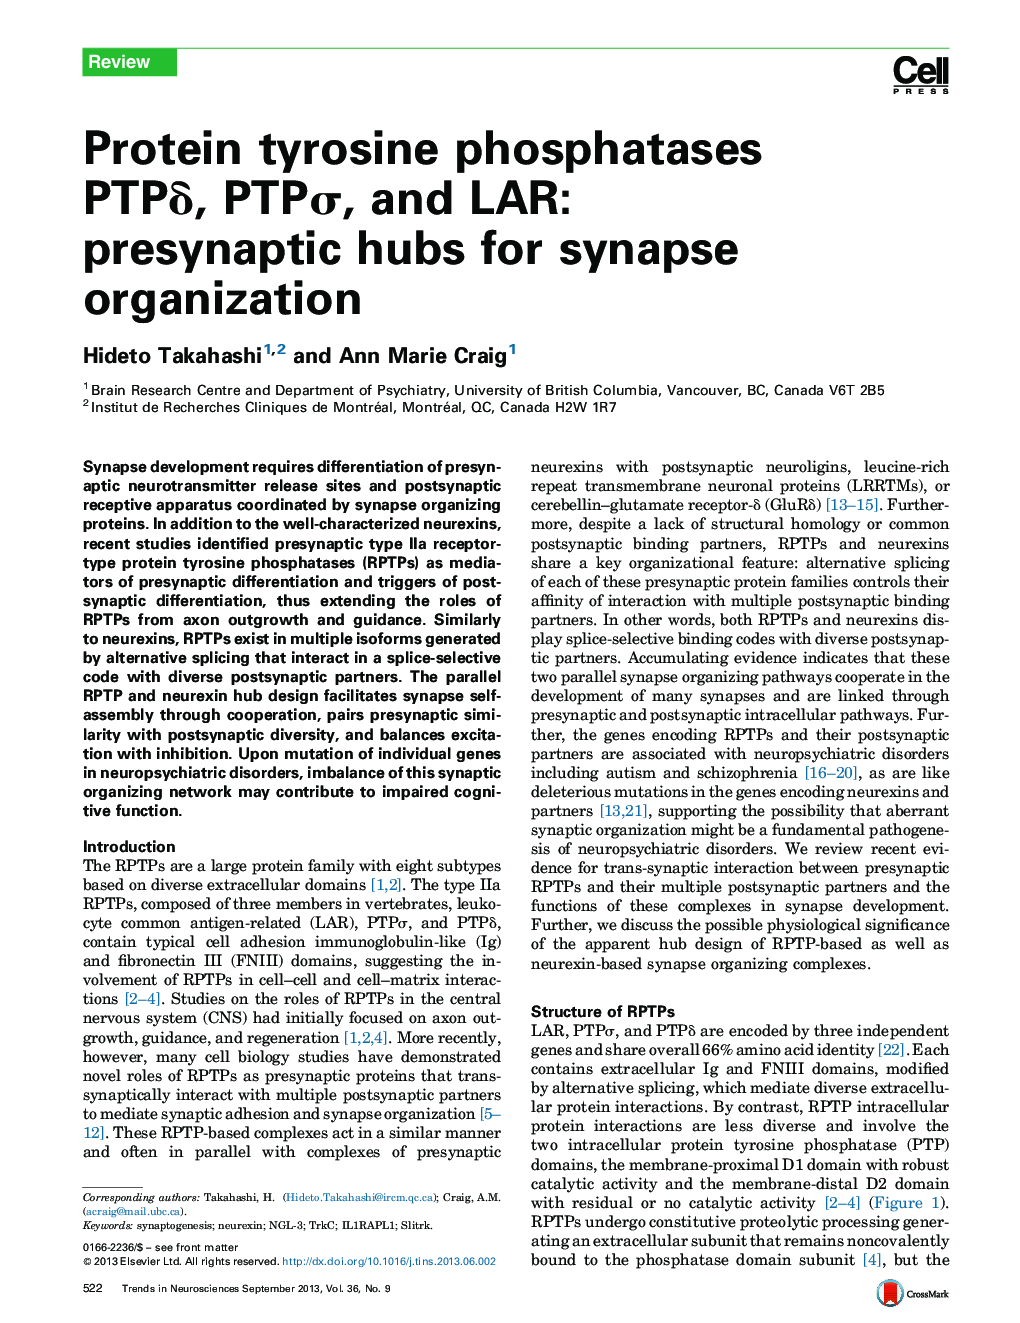 Protein tyrosine phosphatases PTPδ, PTPσ, and LAR: presynaptic hubs for synapse organization